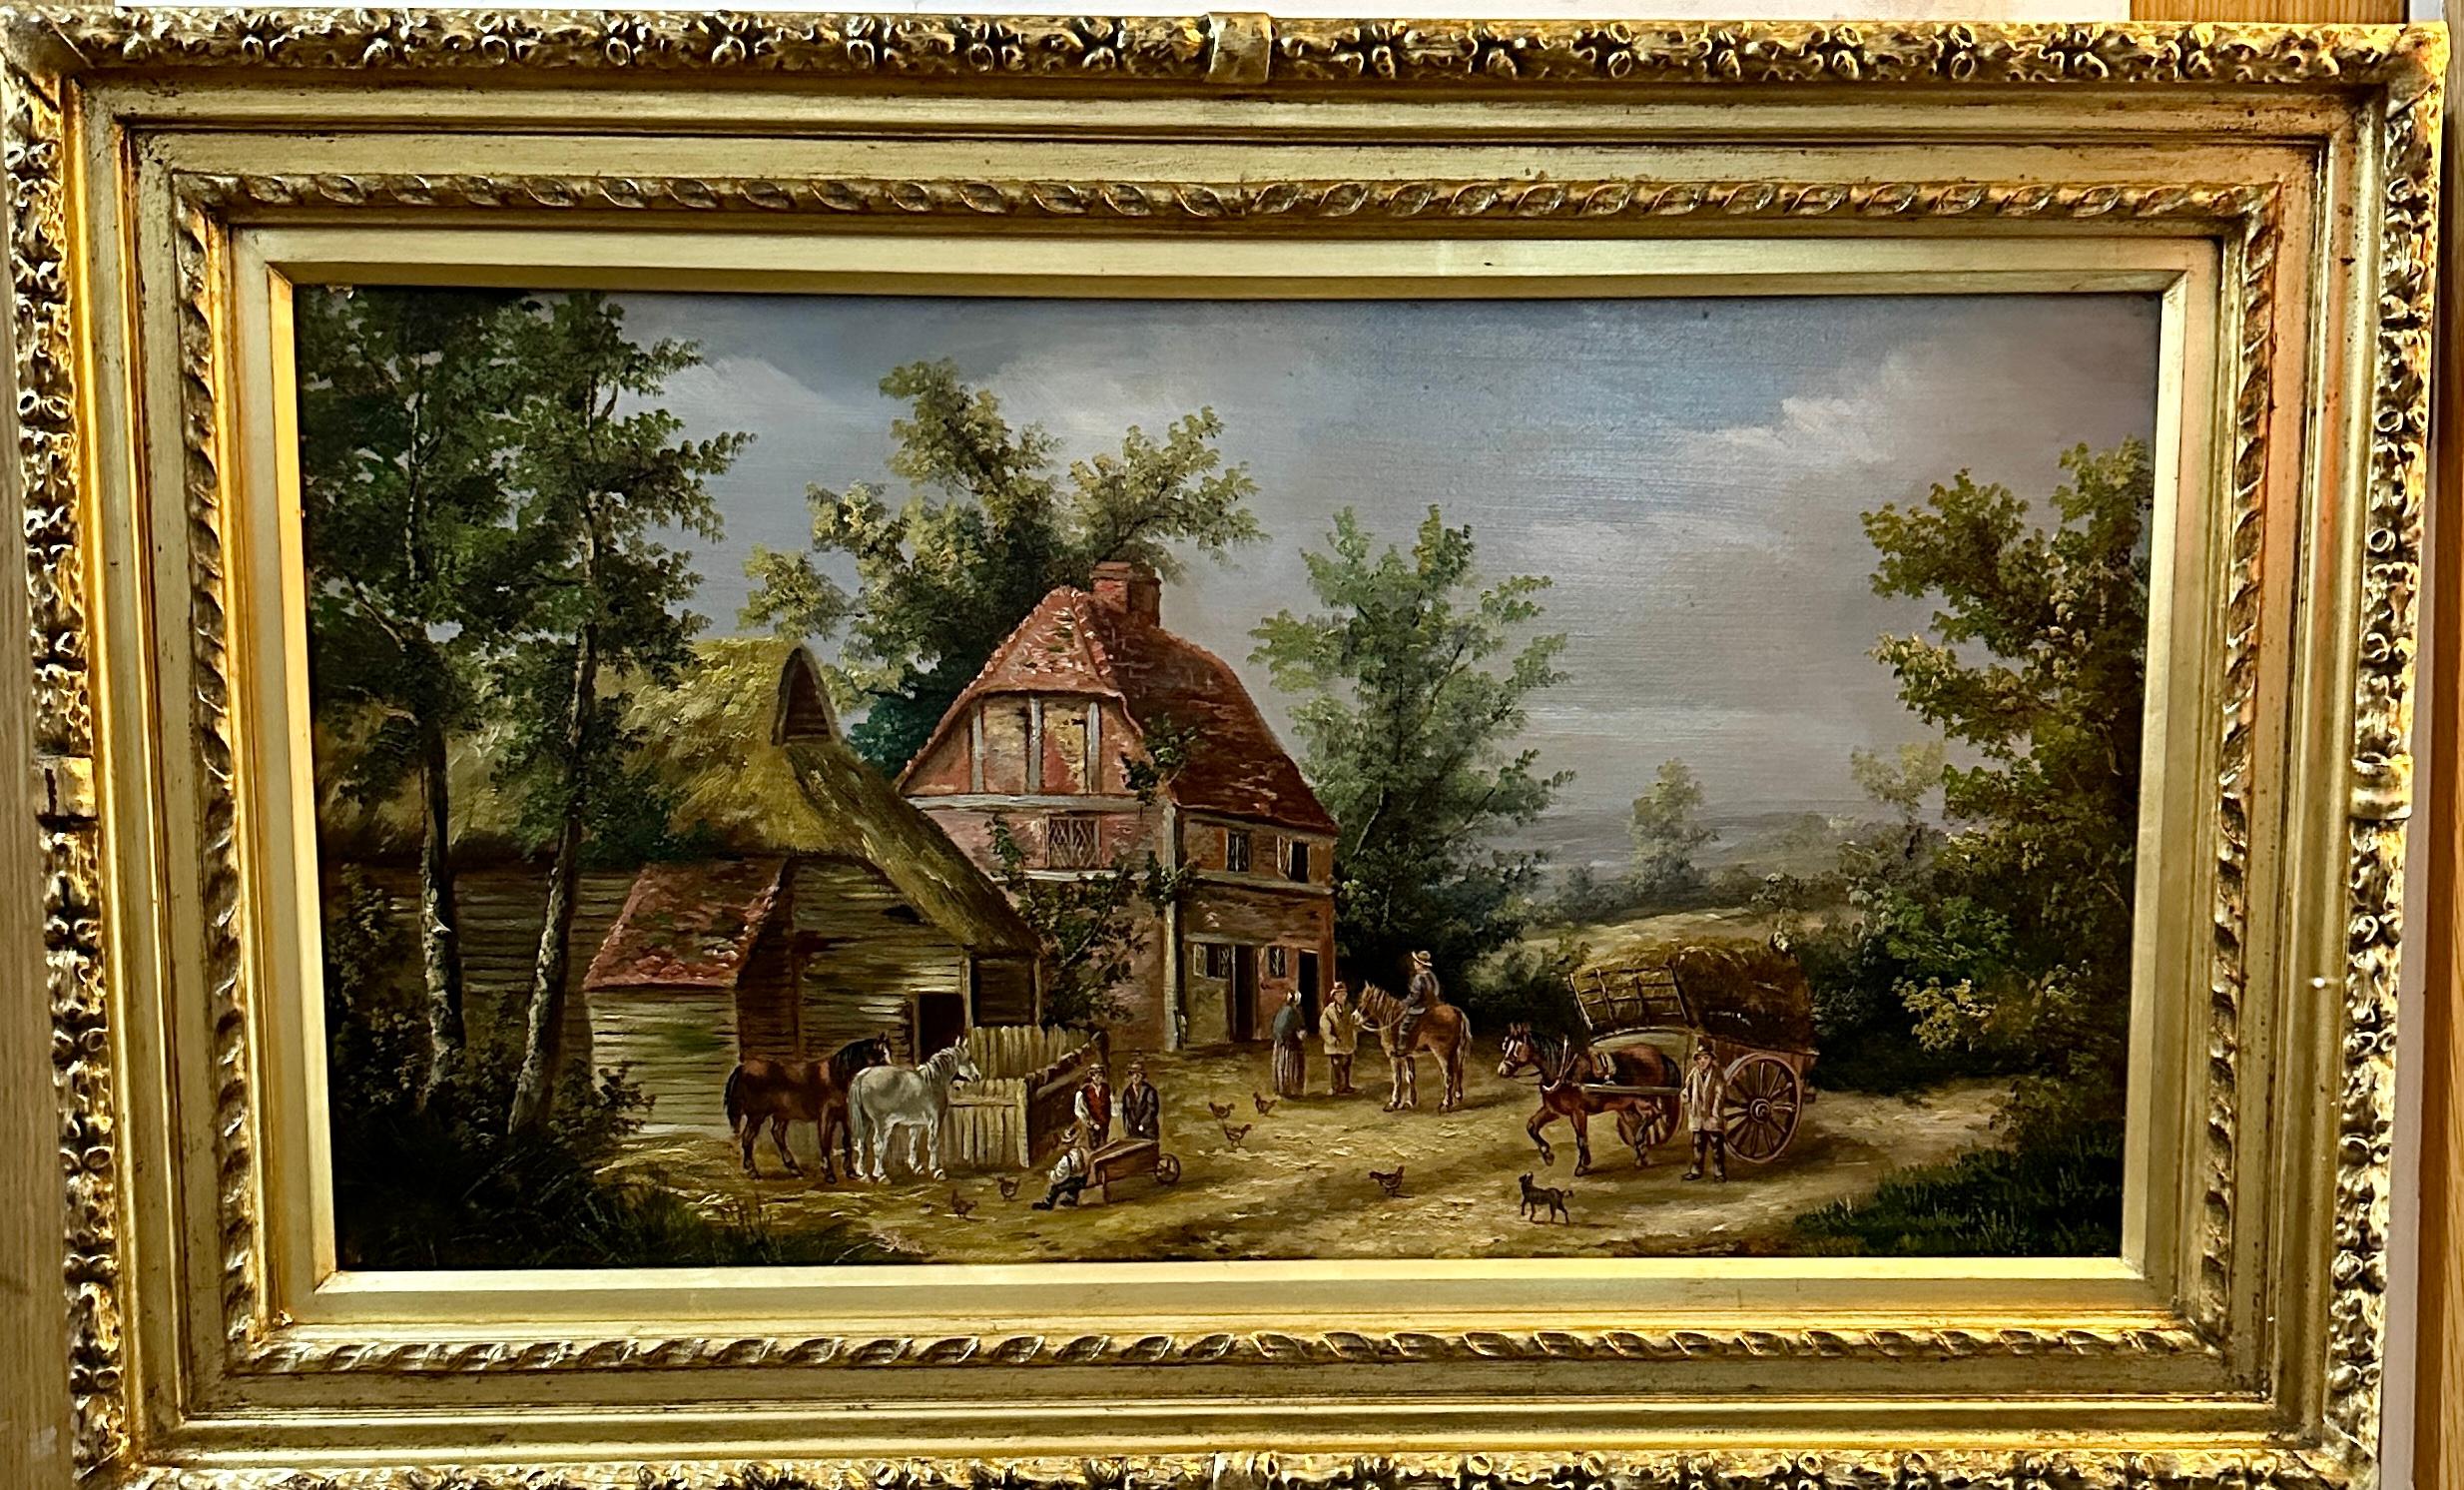 Georgina Lara Figurative Painting - 19th century English village scene with cottages, horses landscape and people